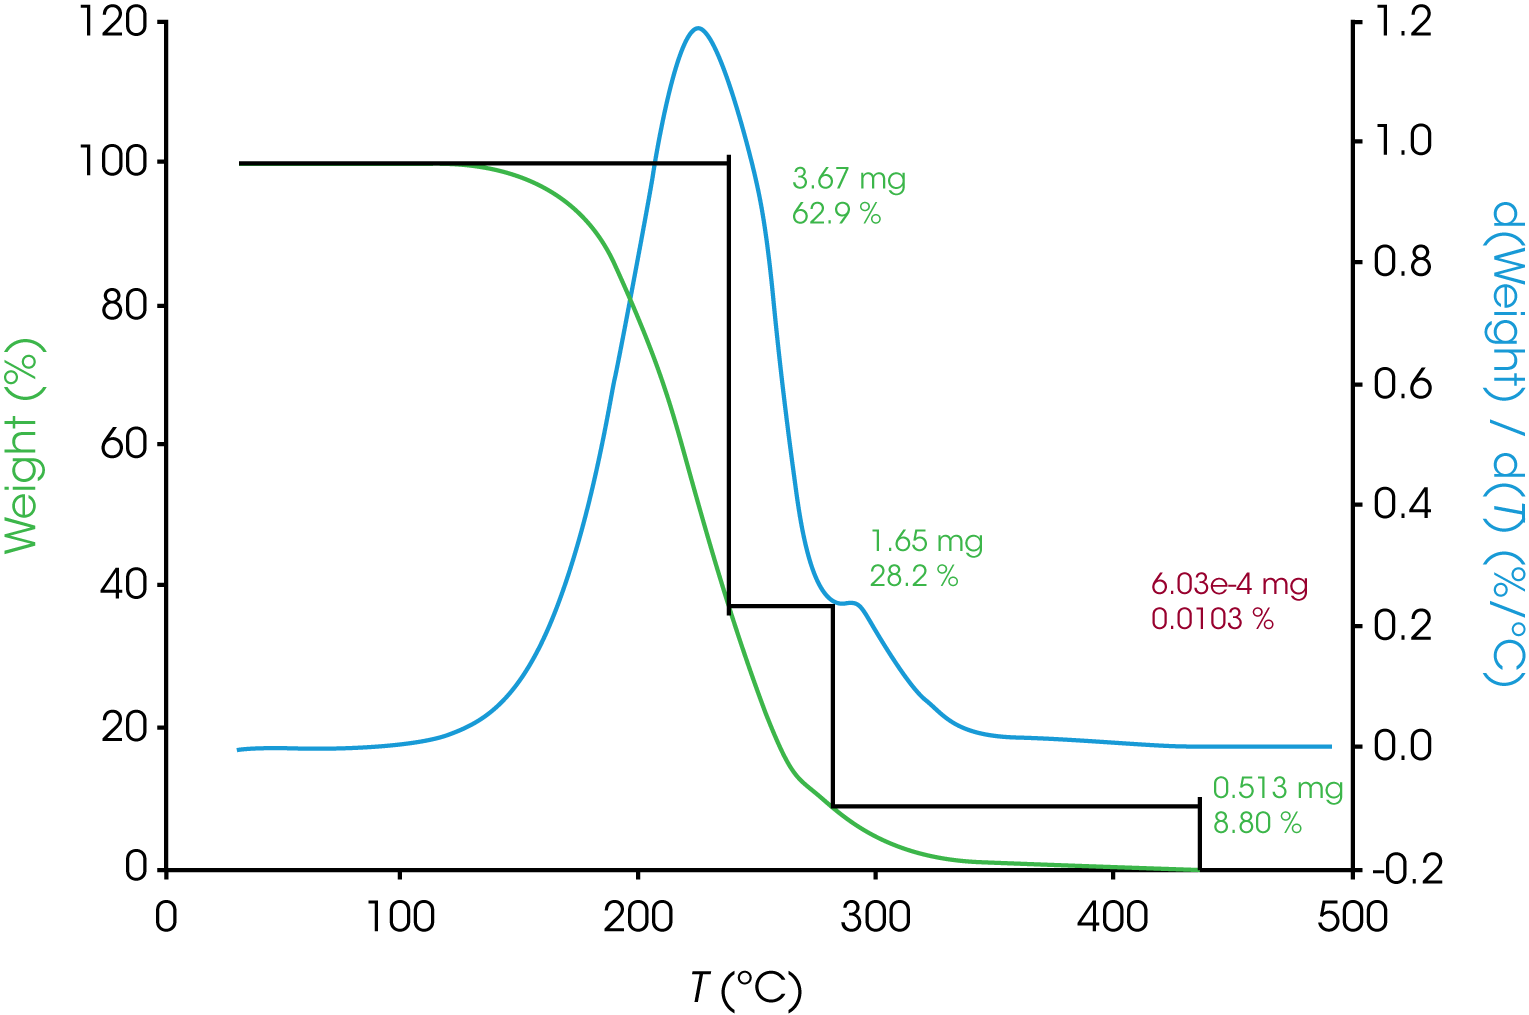 Figure 9. TGA Mass Loss Data for Oil ‘B’